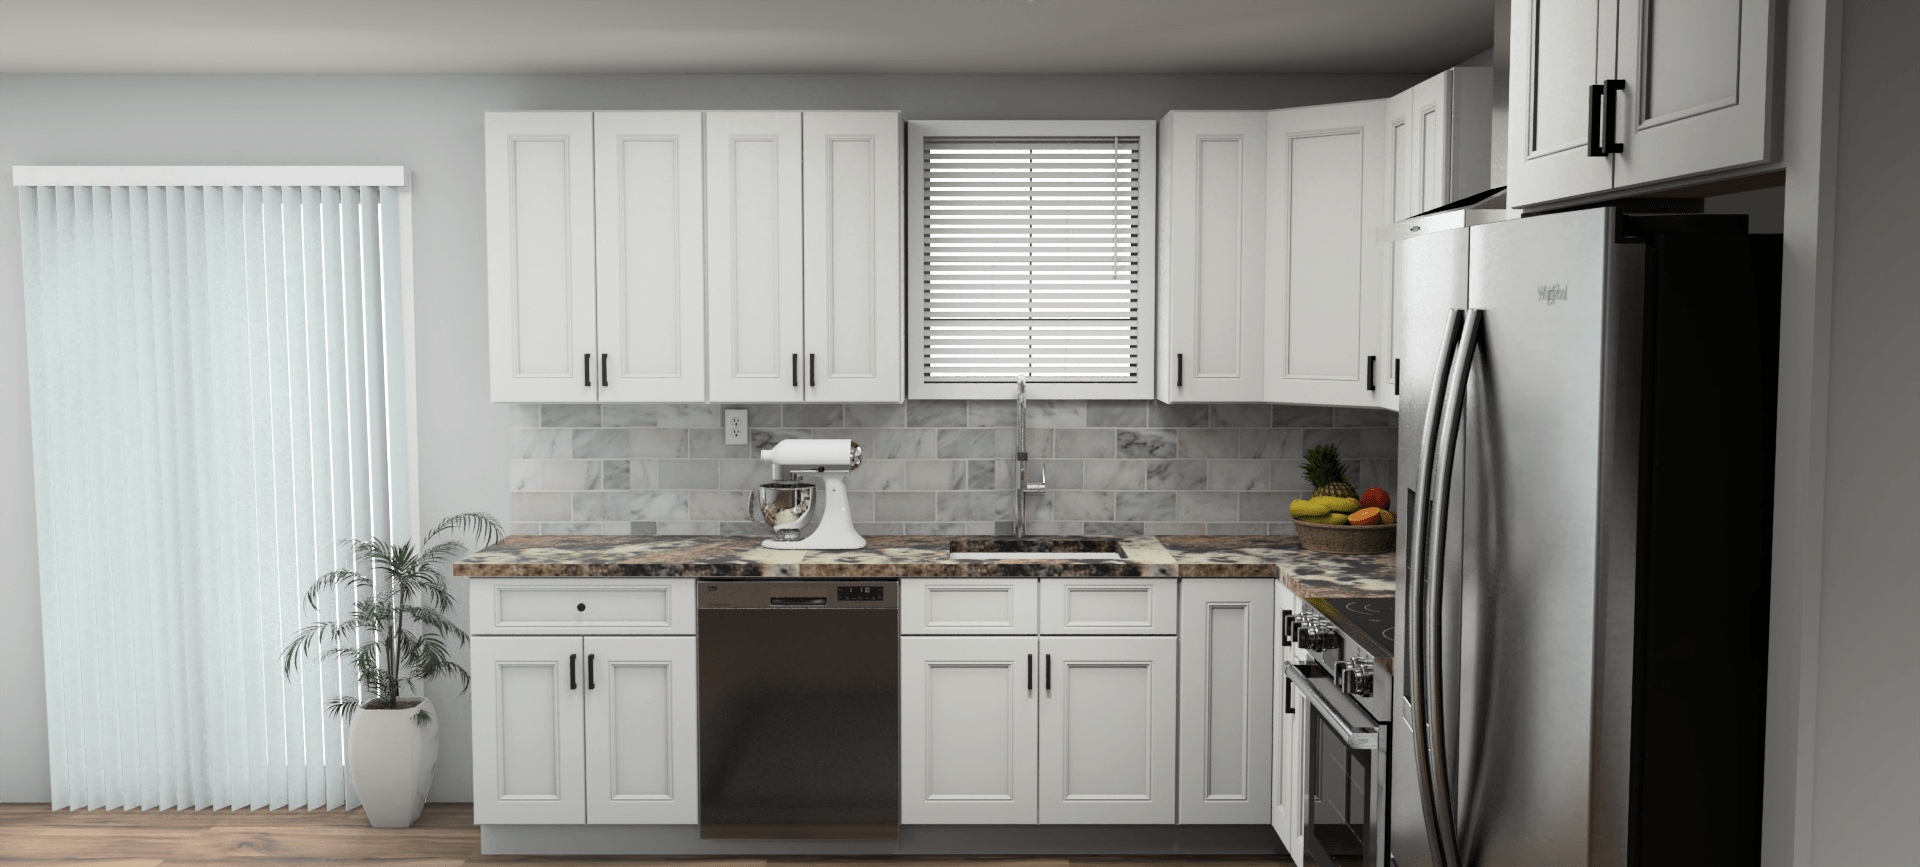 Fabuwood Allure Nexus Frost 10 x 12 L Shaped Kitchen Side Layout Photo